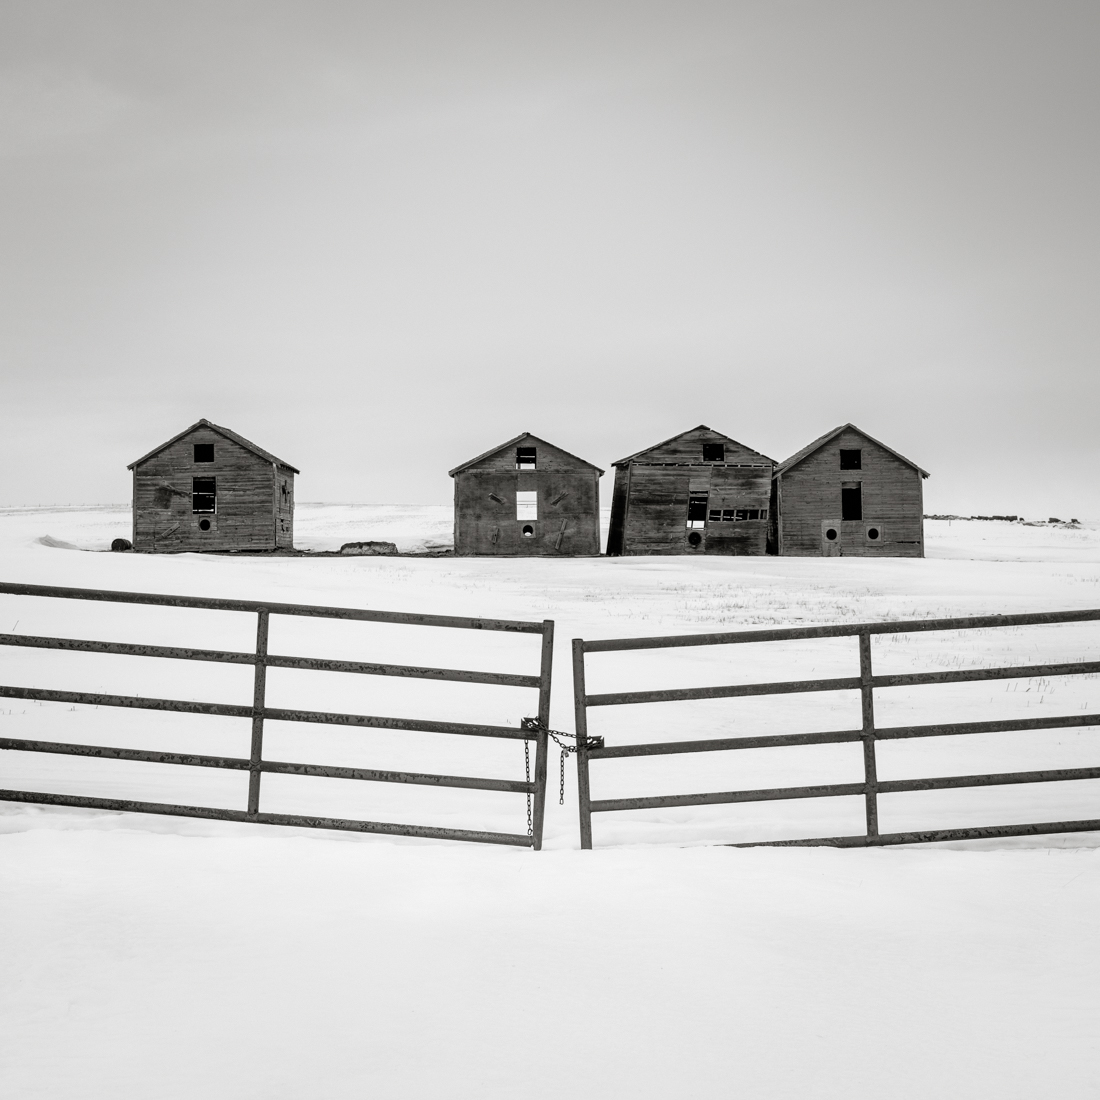 Prairie Winter